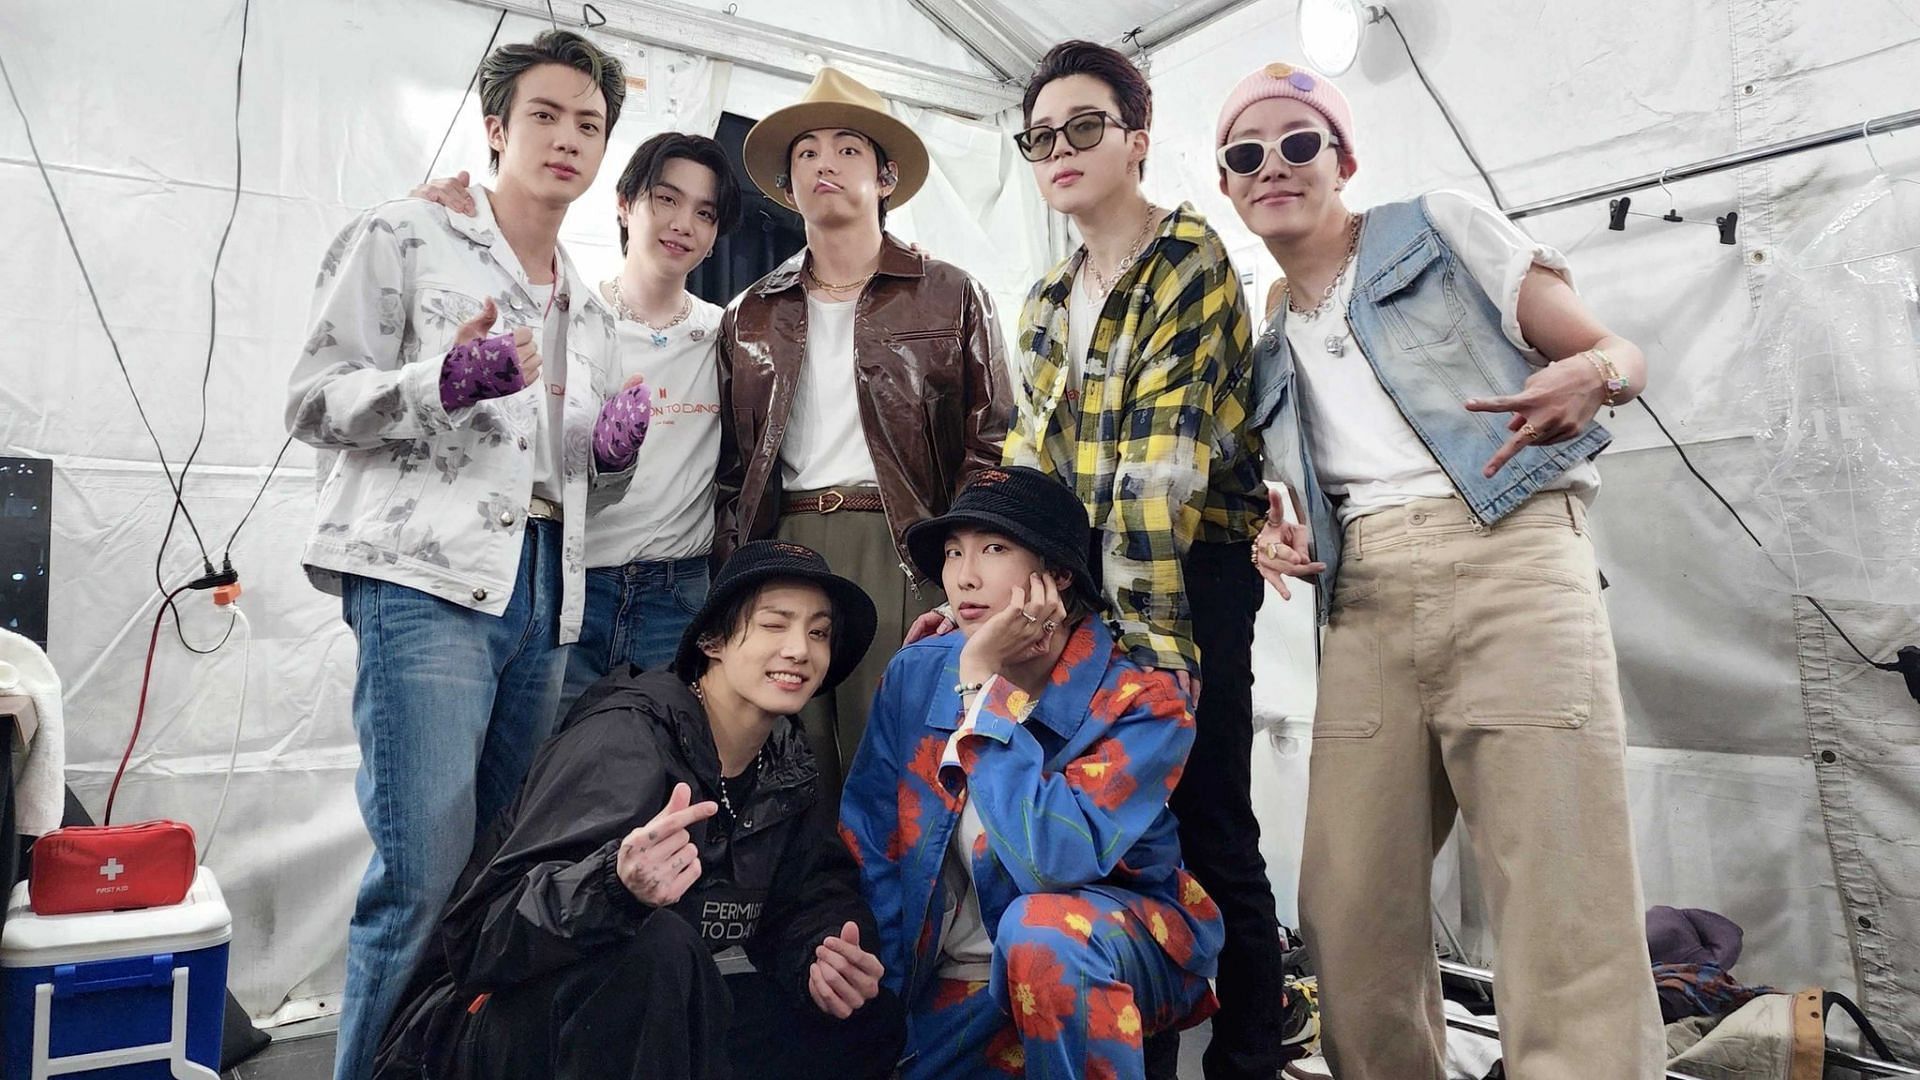 A still of the K-pop boy group (Image via @bts_bighit/Twitter)